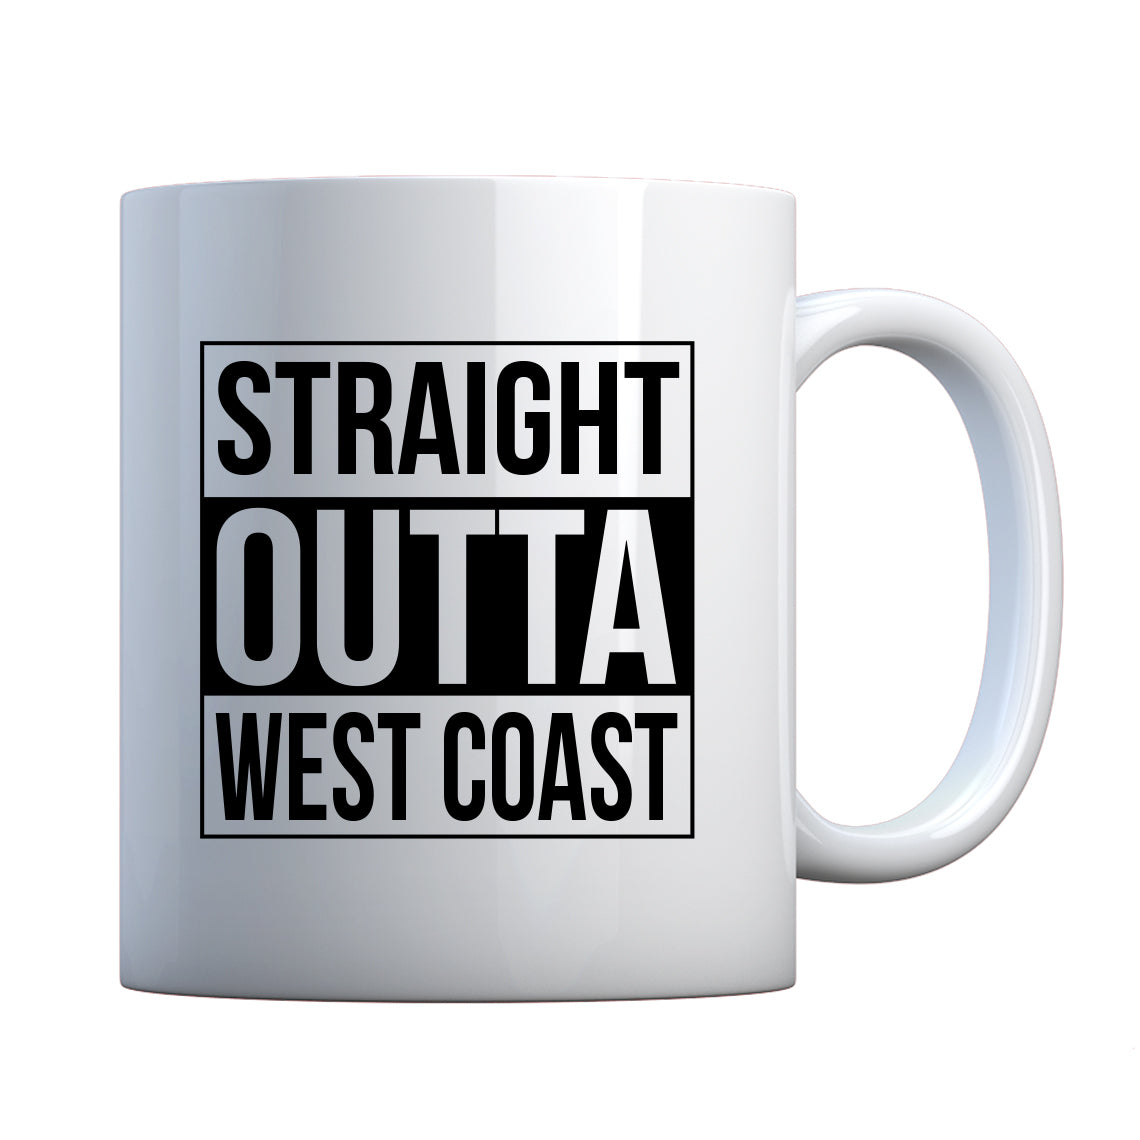 Straight Outta West Coast Ceramic Gift Mug